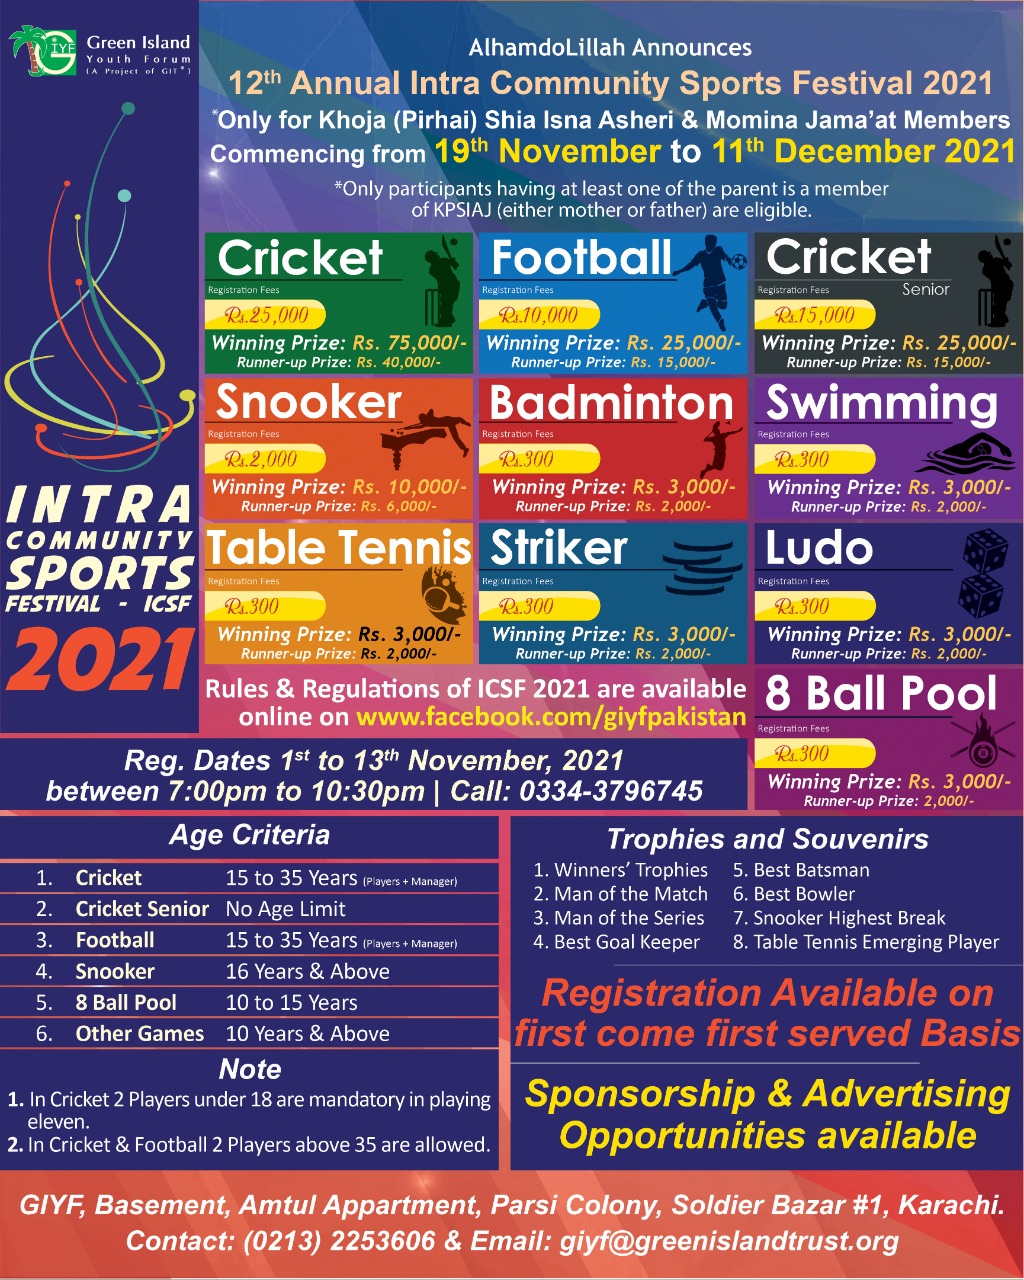 Intra Community Sports Festival 2021